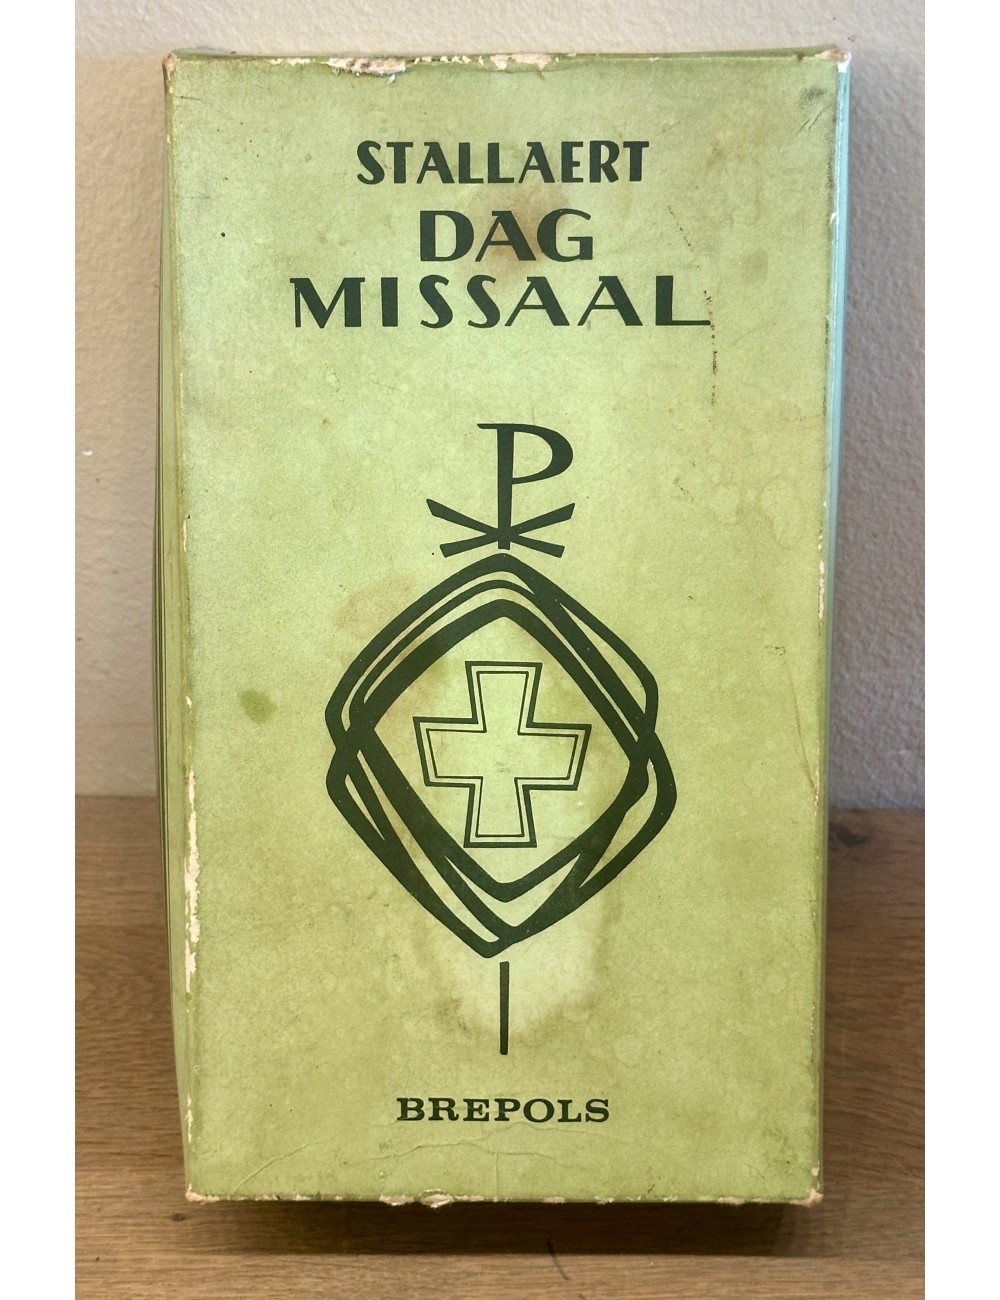 Dagmissaal Stallaert - uitgever Brepols - donkerblauwe kaft incl. etui in originele doos